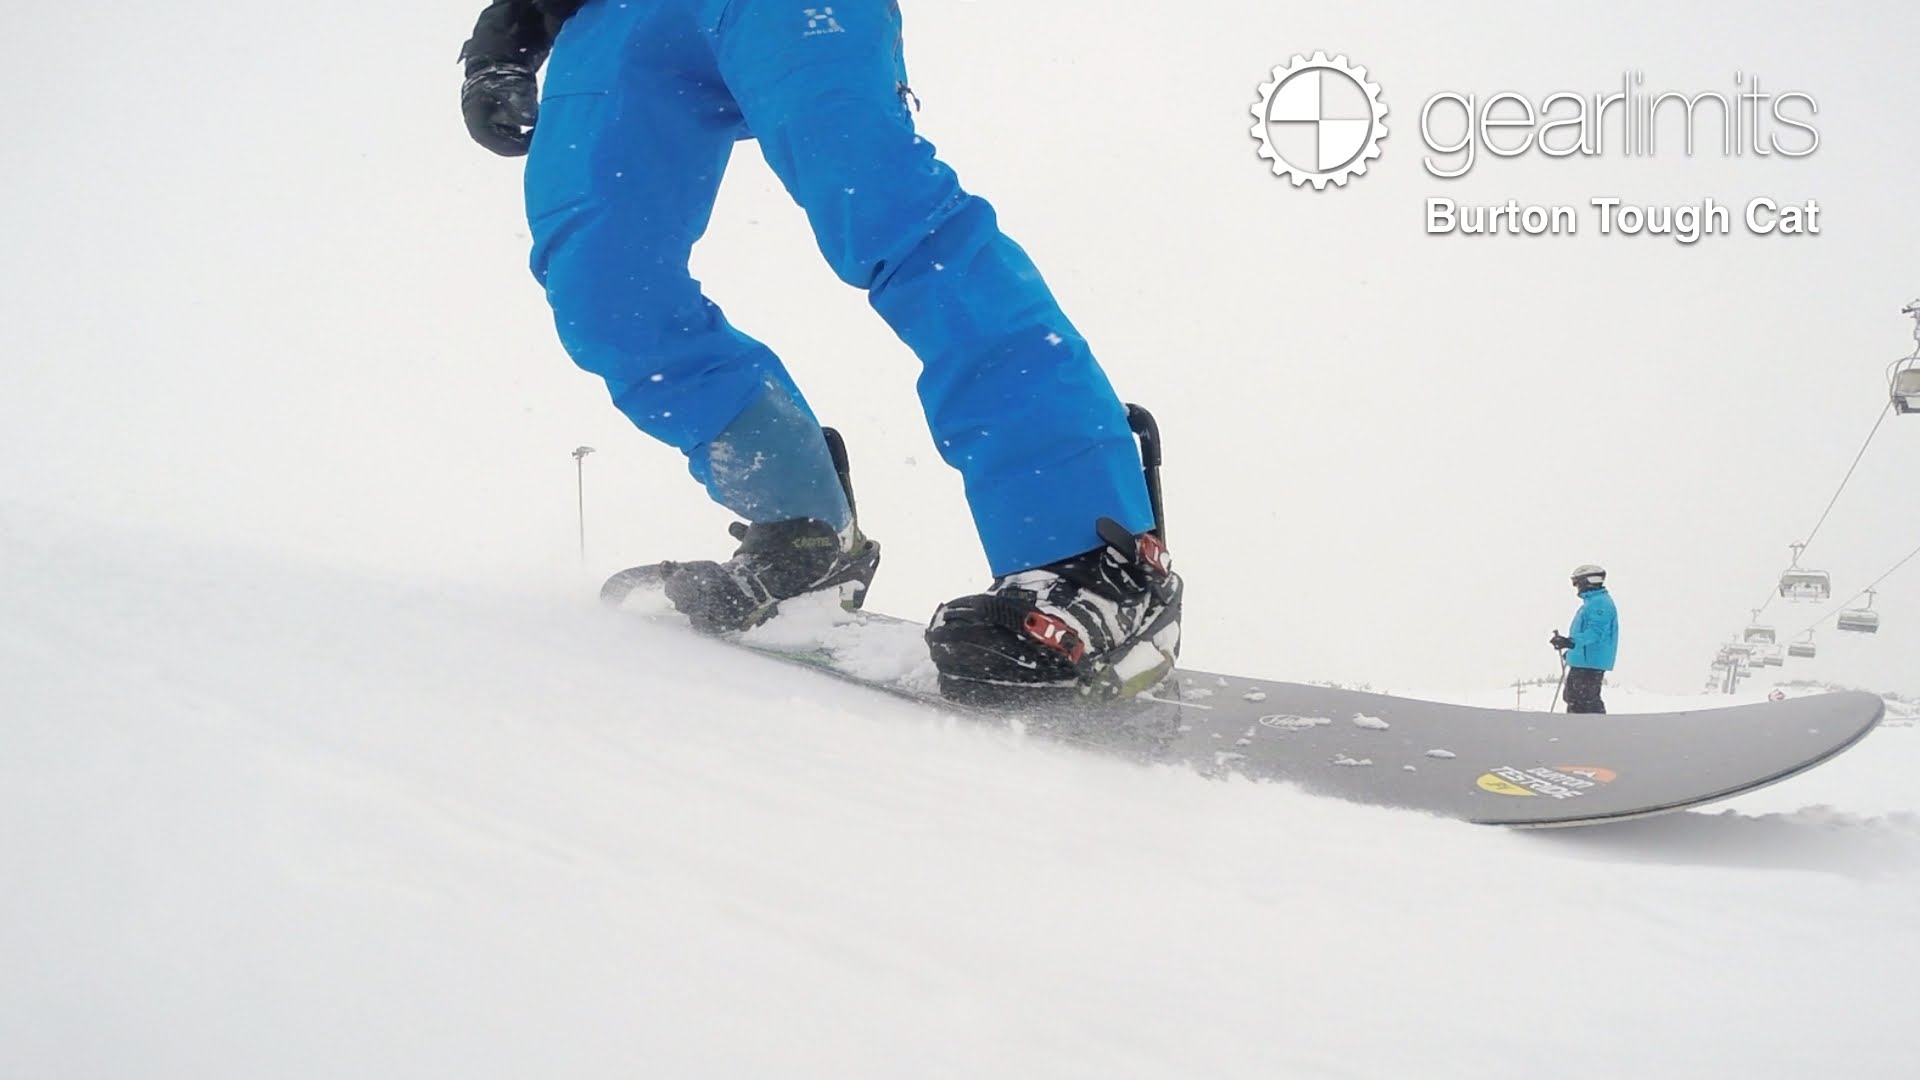 Polair Respect Prik Review: Burton Tough Cat 2016 Snowboard (ENG) - Gearlimits